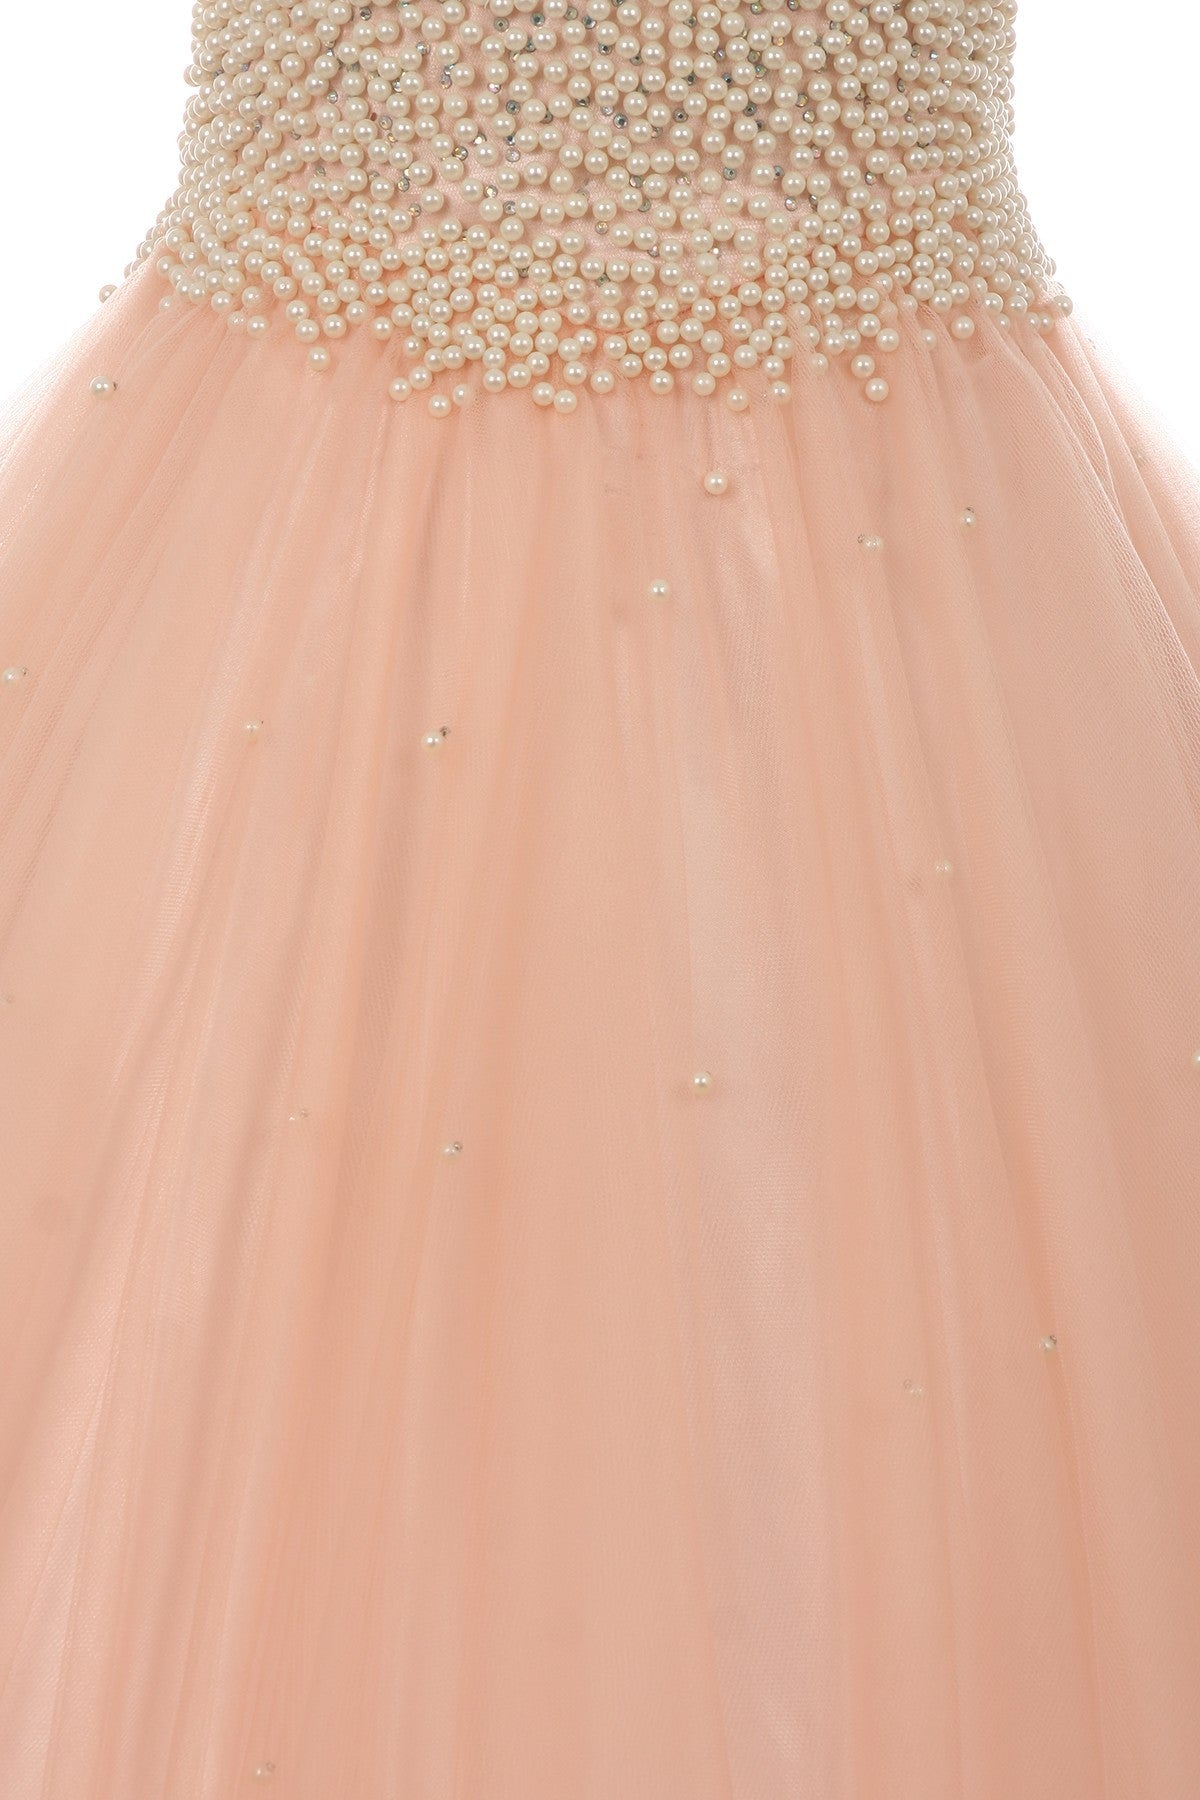 Cinderella Couture USA AS5055 Satin Mini Quince